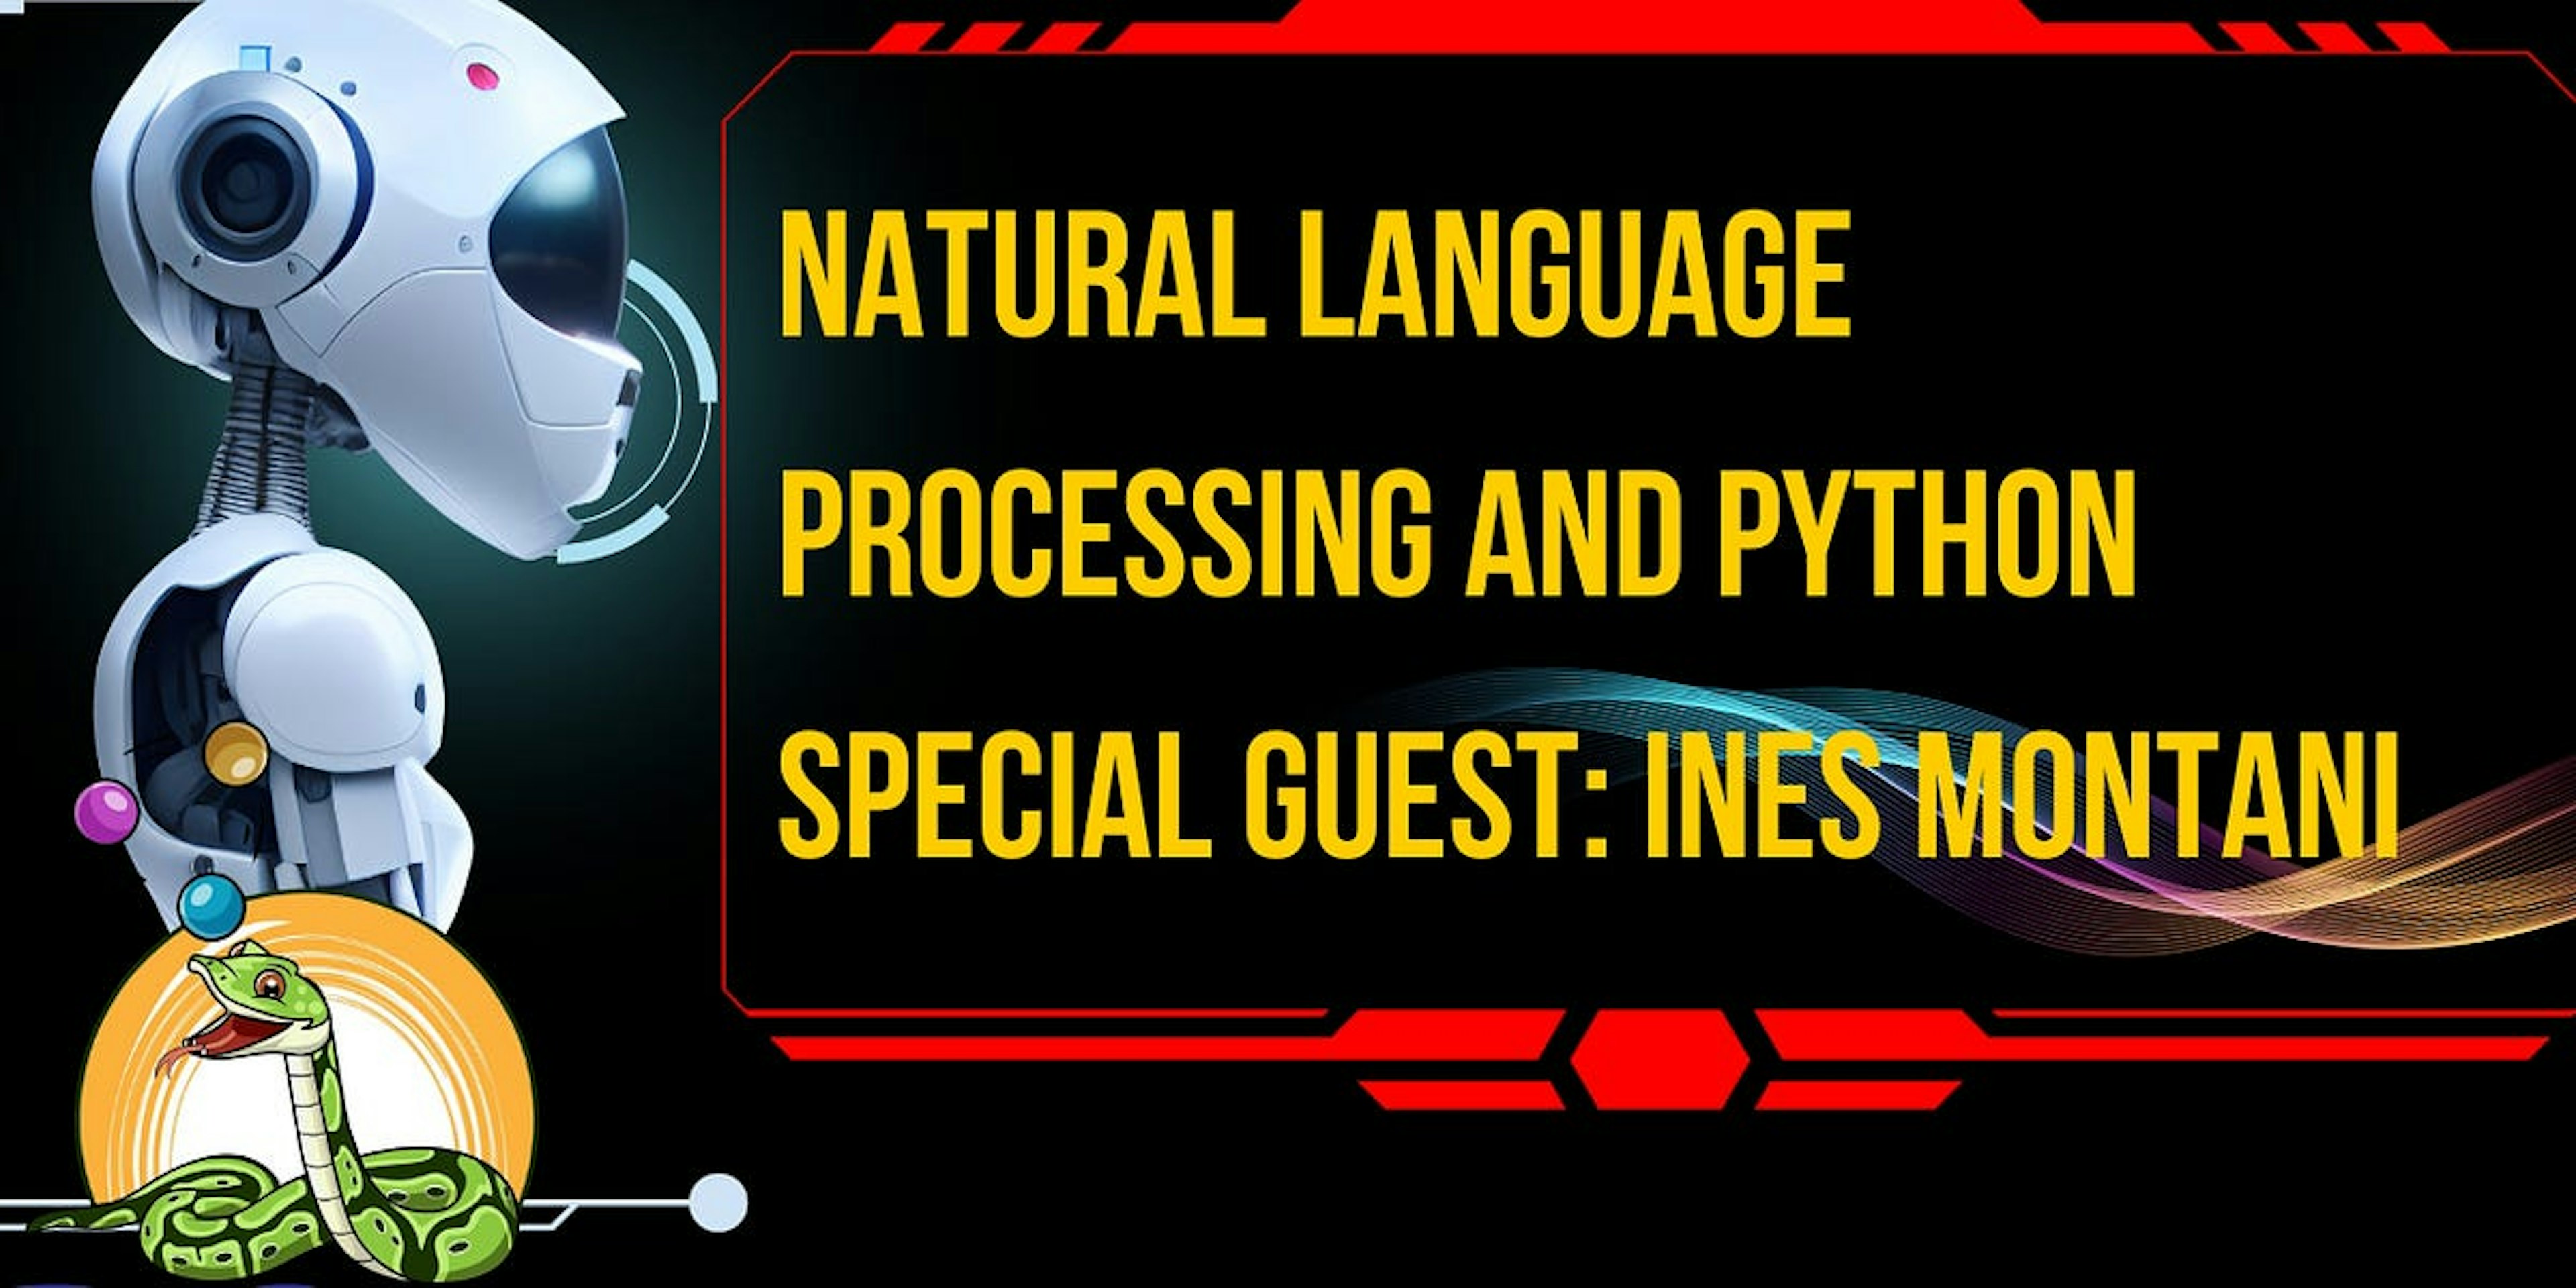 Natural Language Processing and Python